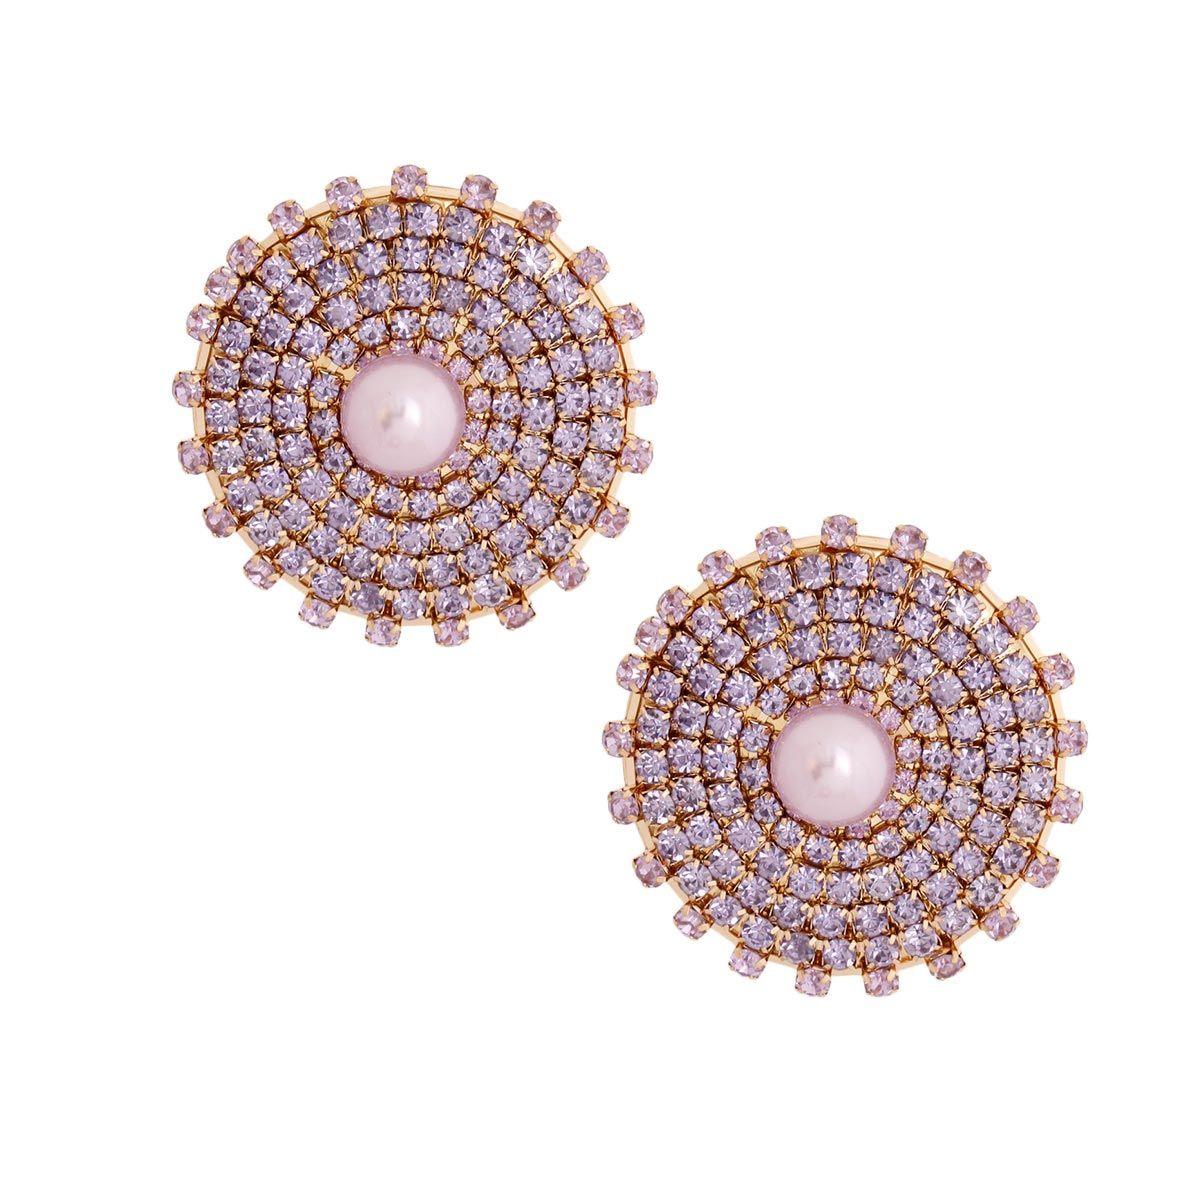 Costume Jewelry: Gold Purple Pearl and Rhinestone Stud Earrings